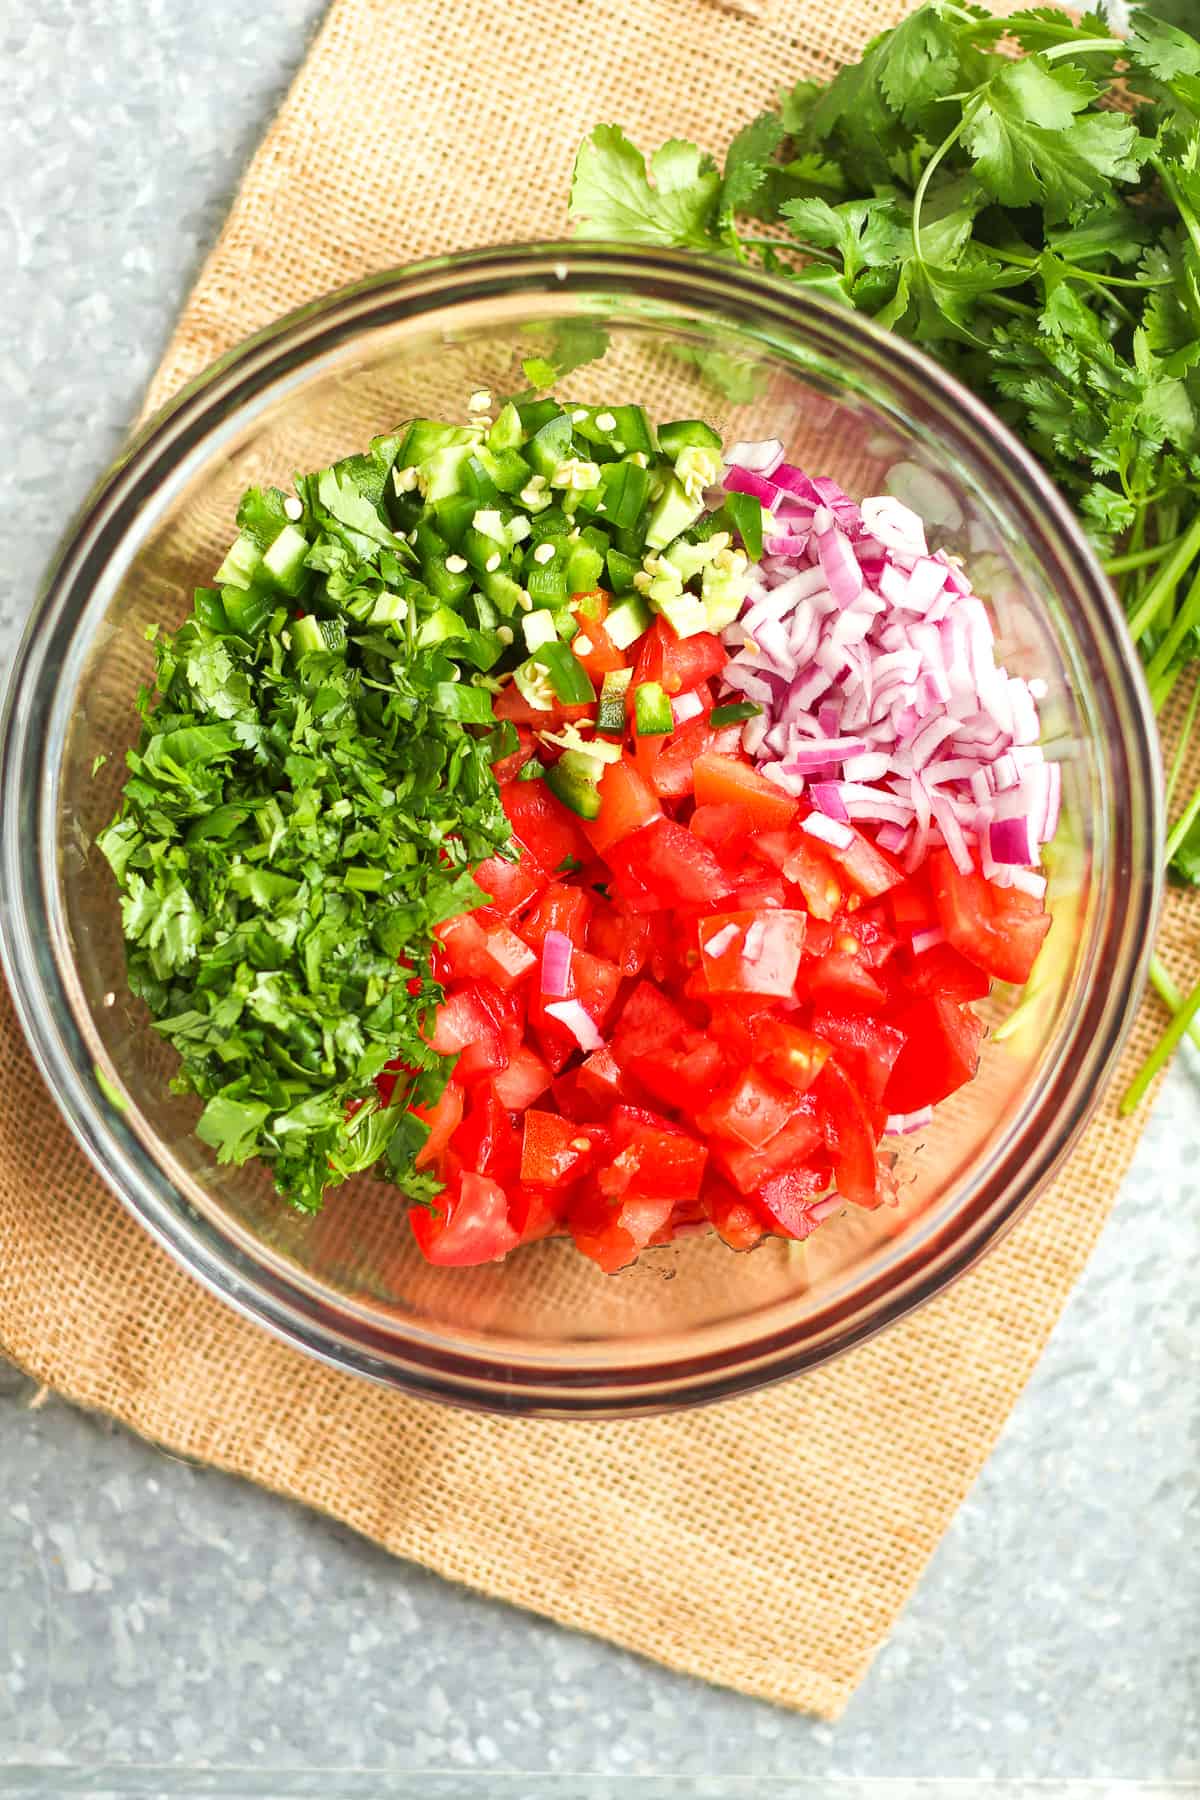 A bowl of the chopped veggies - tomatoes, onion, jalapeño, and cilantro.